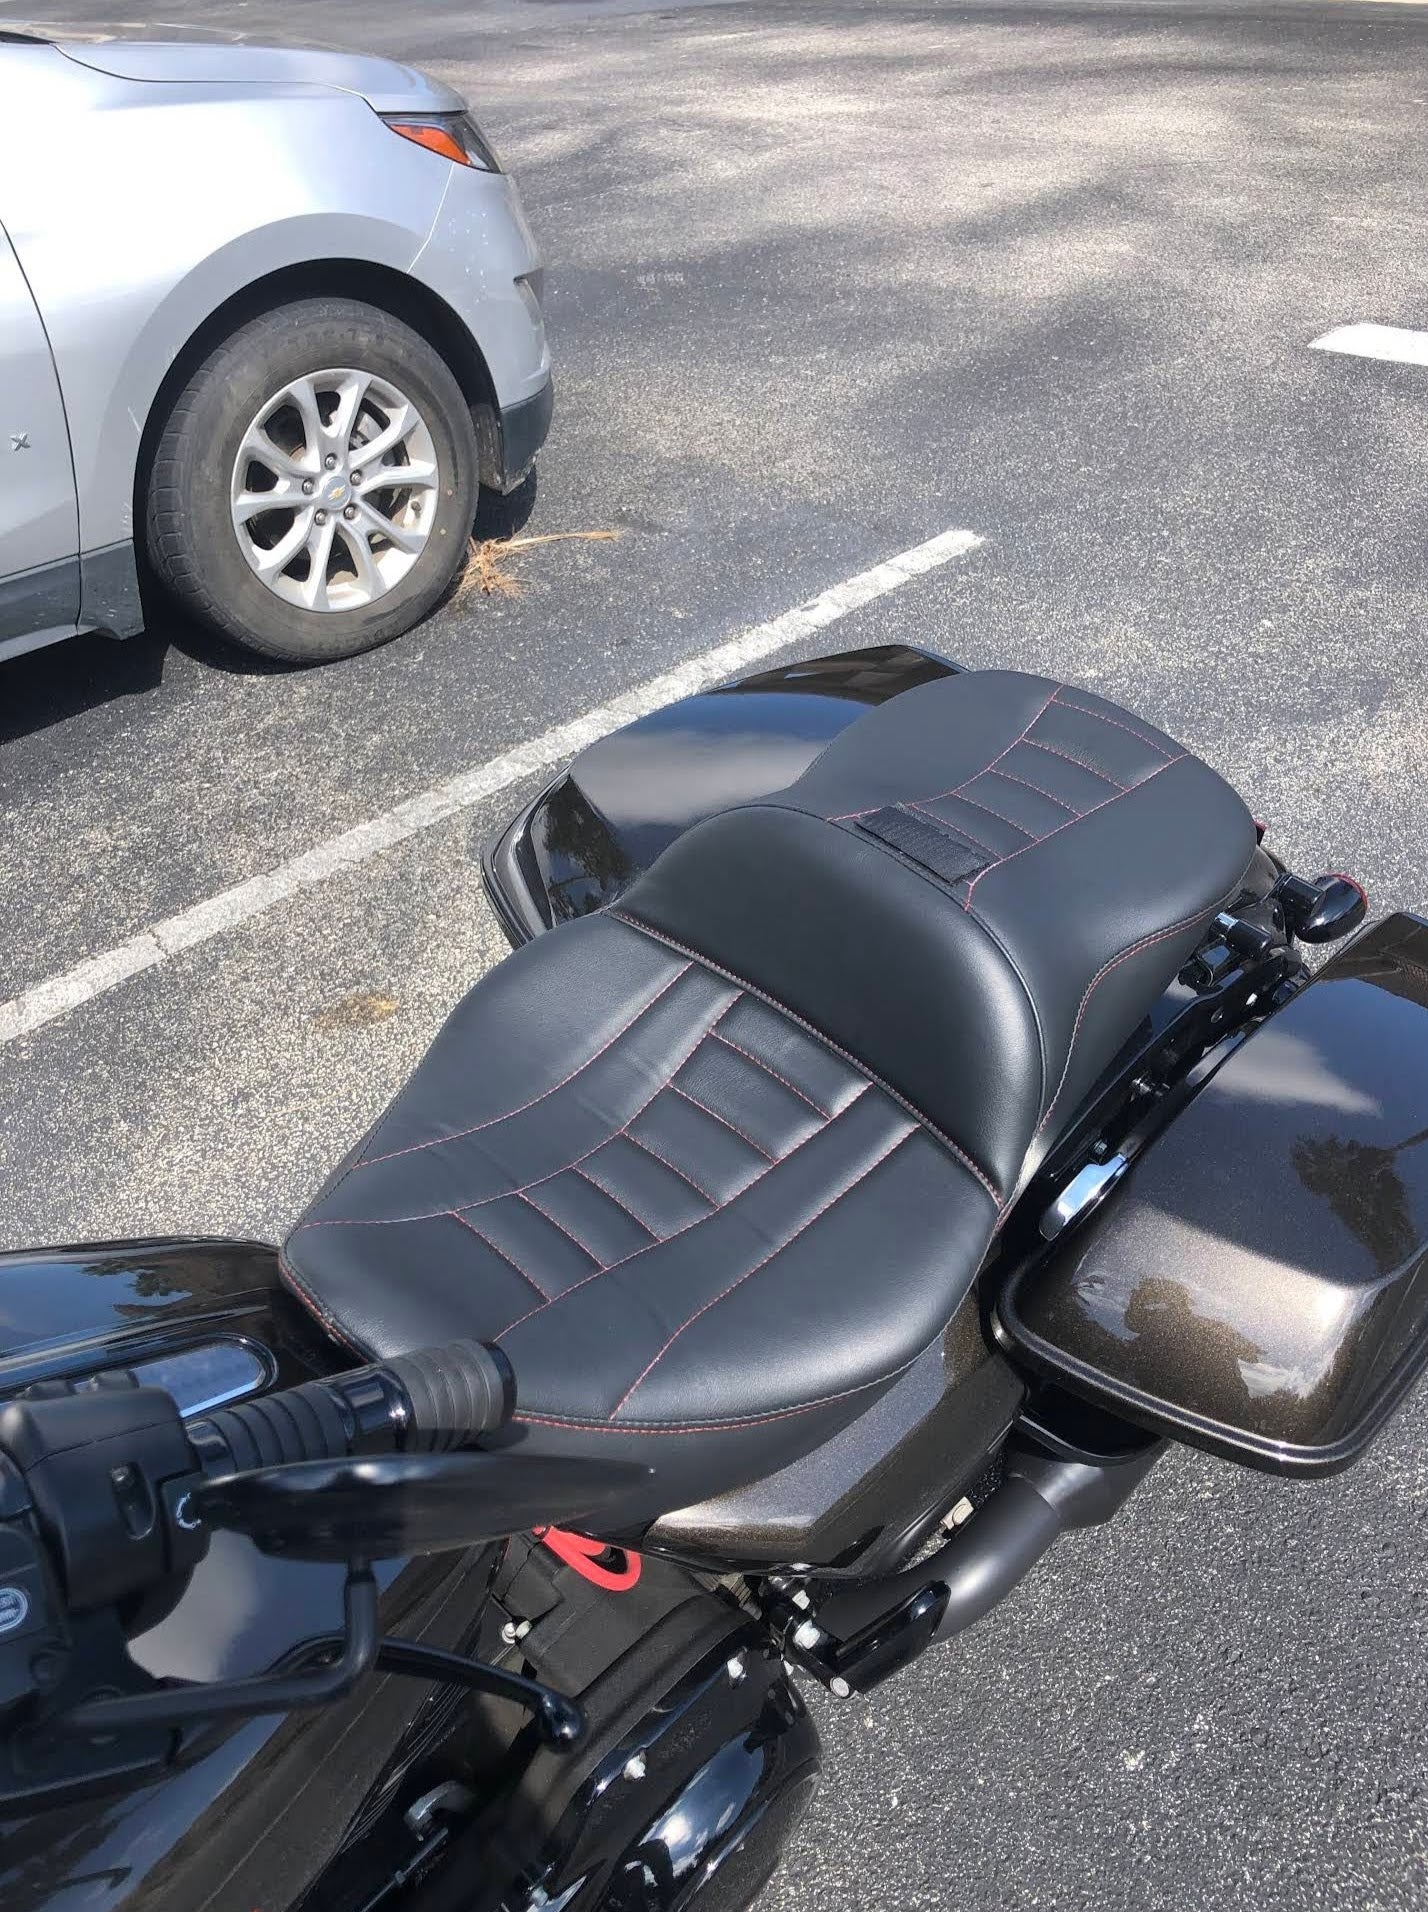 Harley-Davidson // Road Glide - Custom Fit Seat